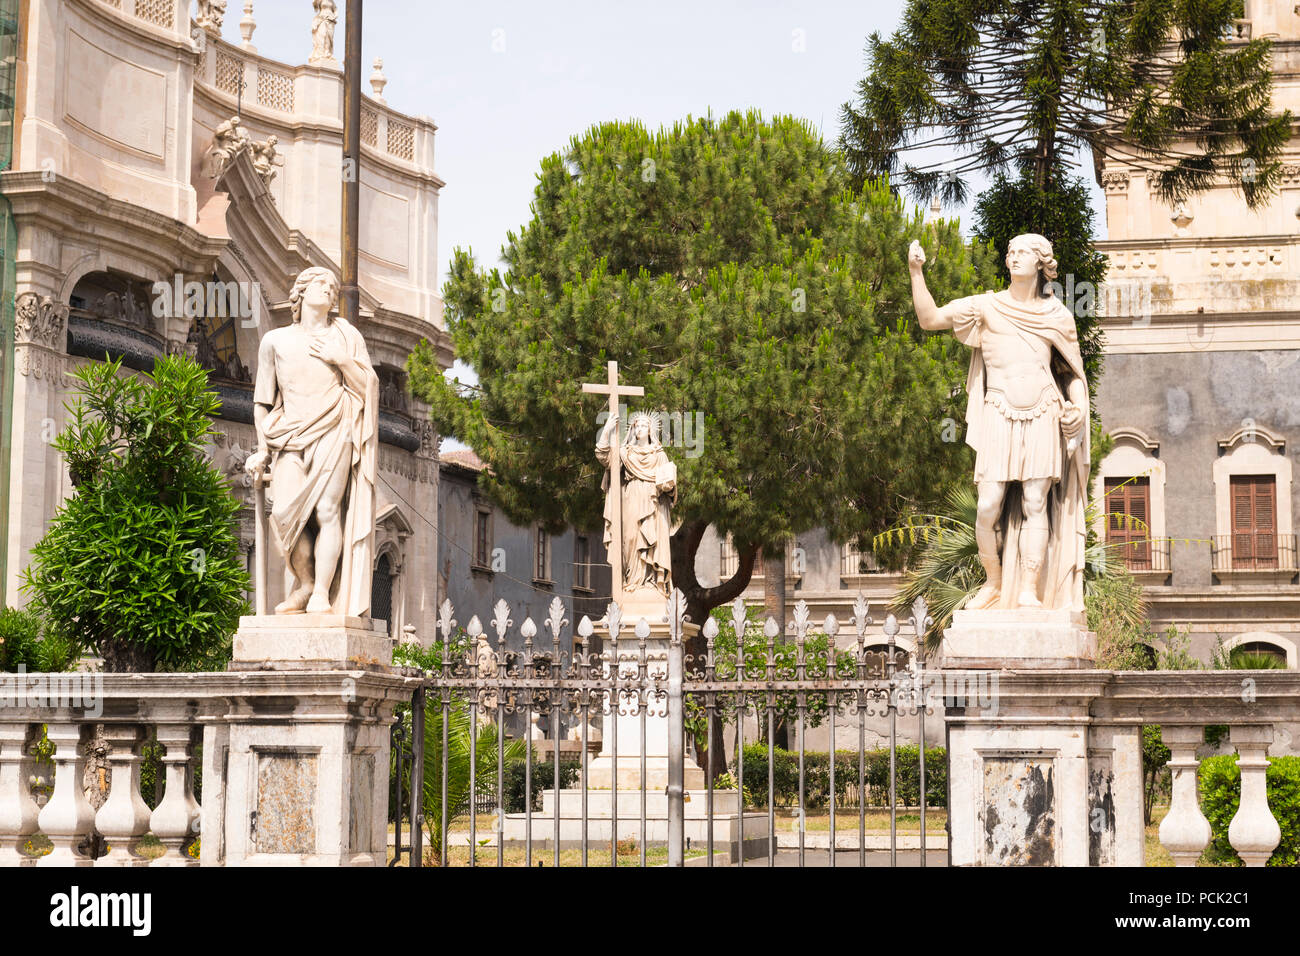 Italien Sizilien Catania Piazzo Duomo Kathedrale Schutzpatron Sant Agata G B Vaccarini steinernen Statuen Skulpturen Garten Park Metallgeländer Stockfoto